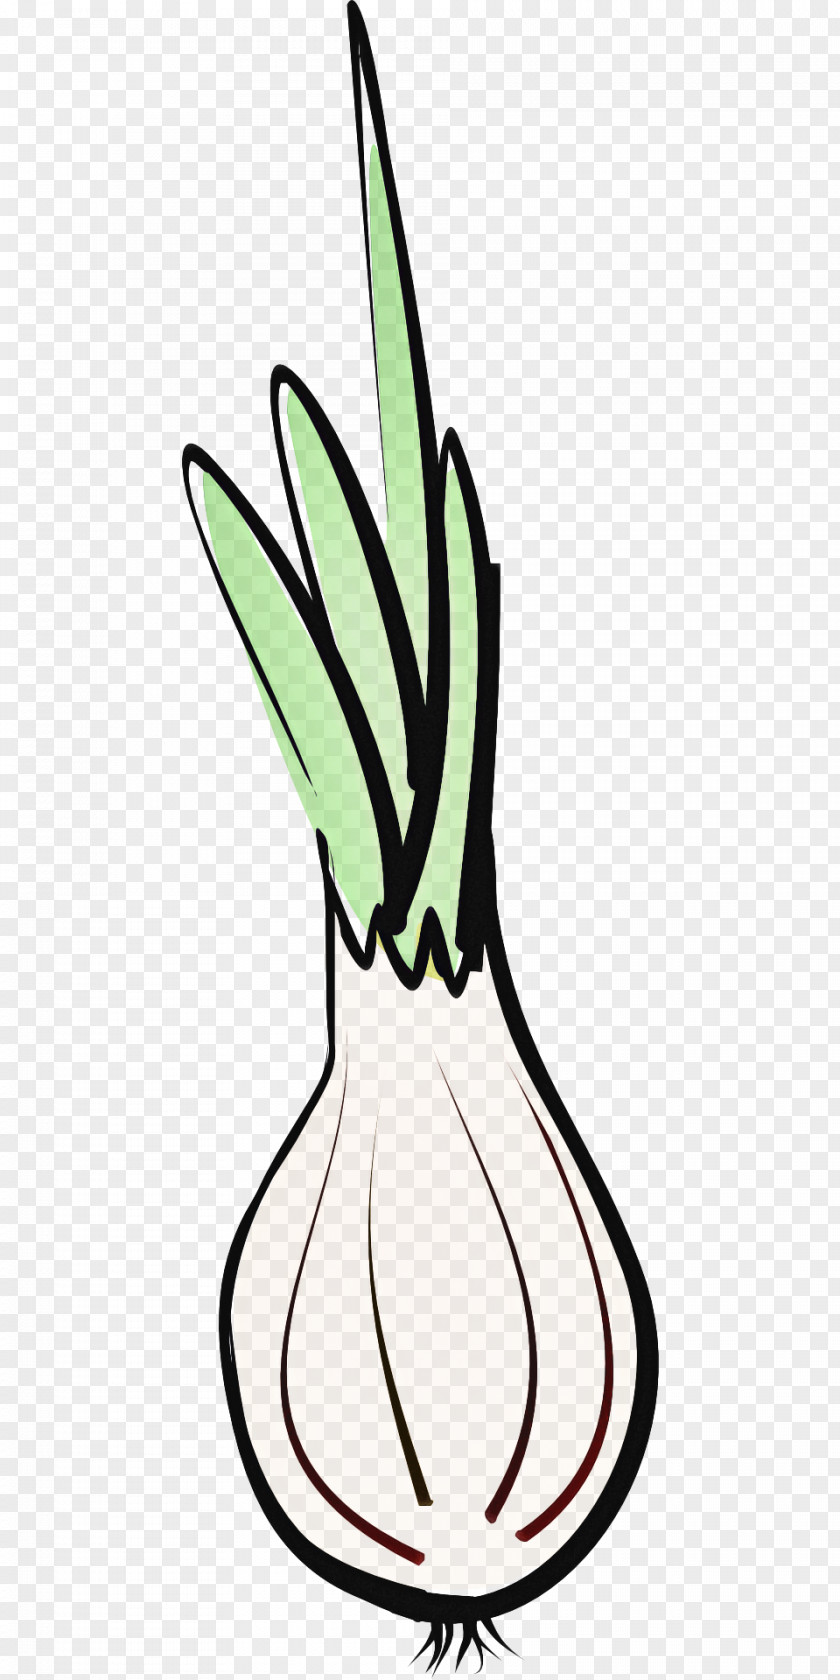 Squash Onion Flower Line Art Plant Stem Leaf PNG